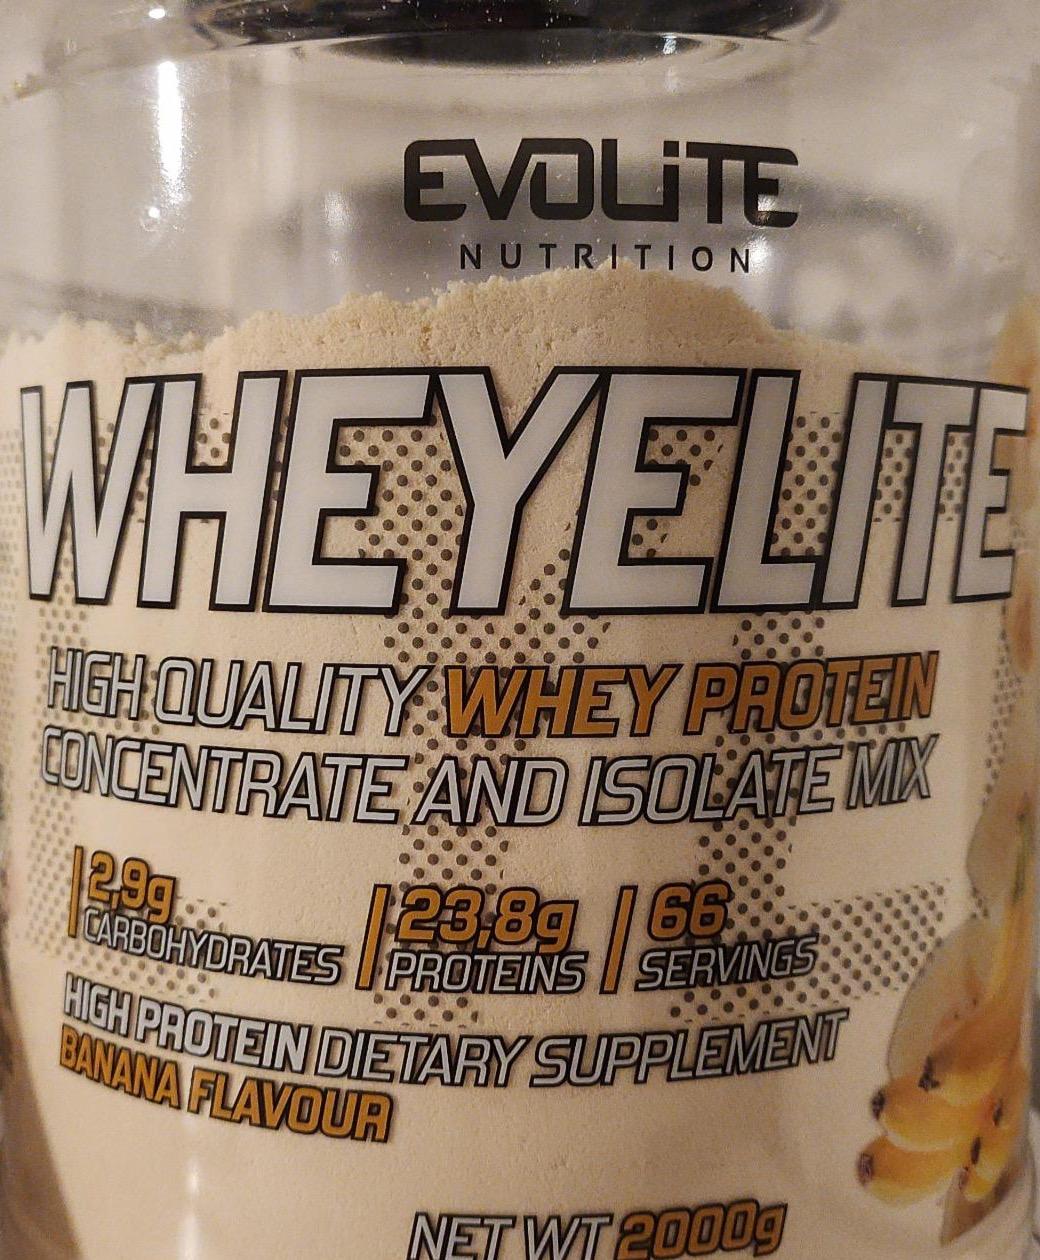 Zdjęcia - Wheyelite Banana flavour Evolite Nutrition